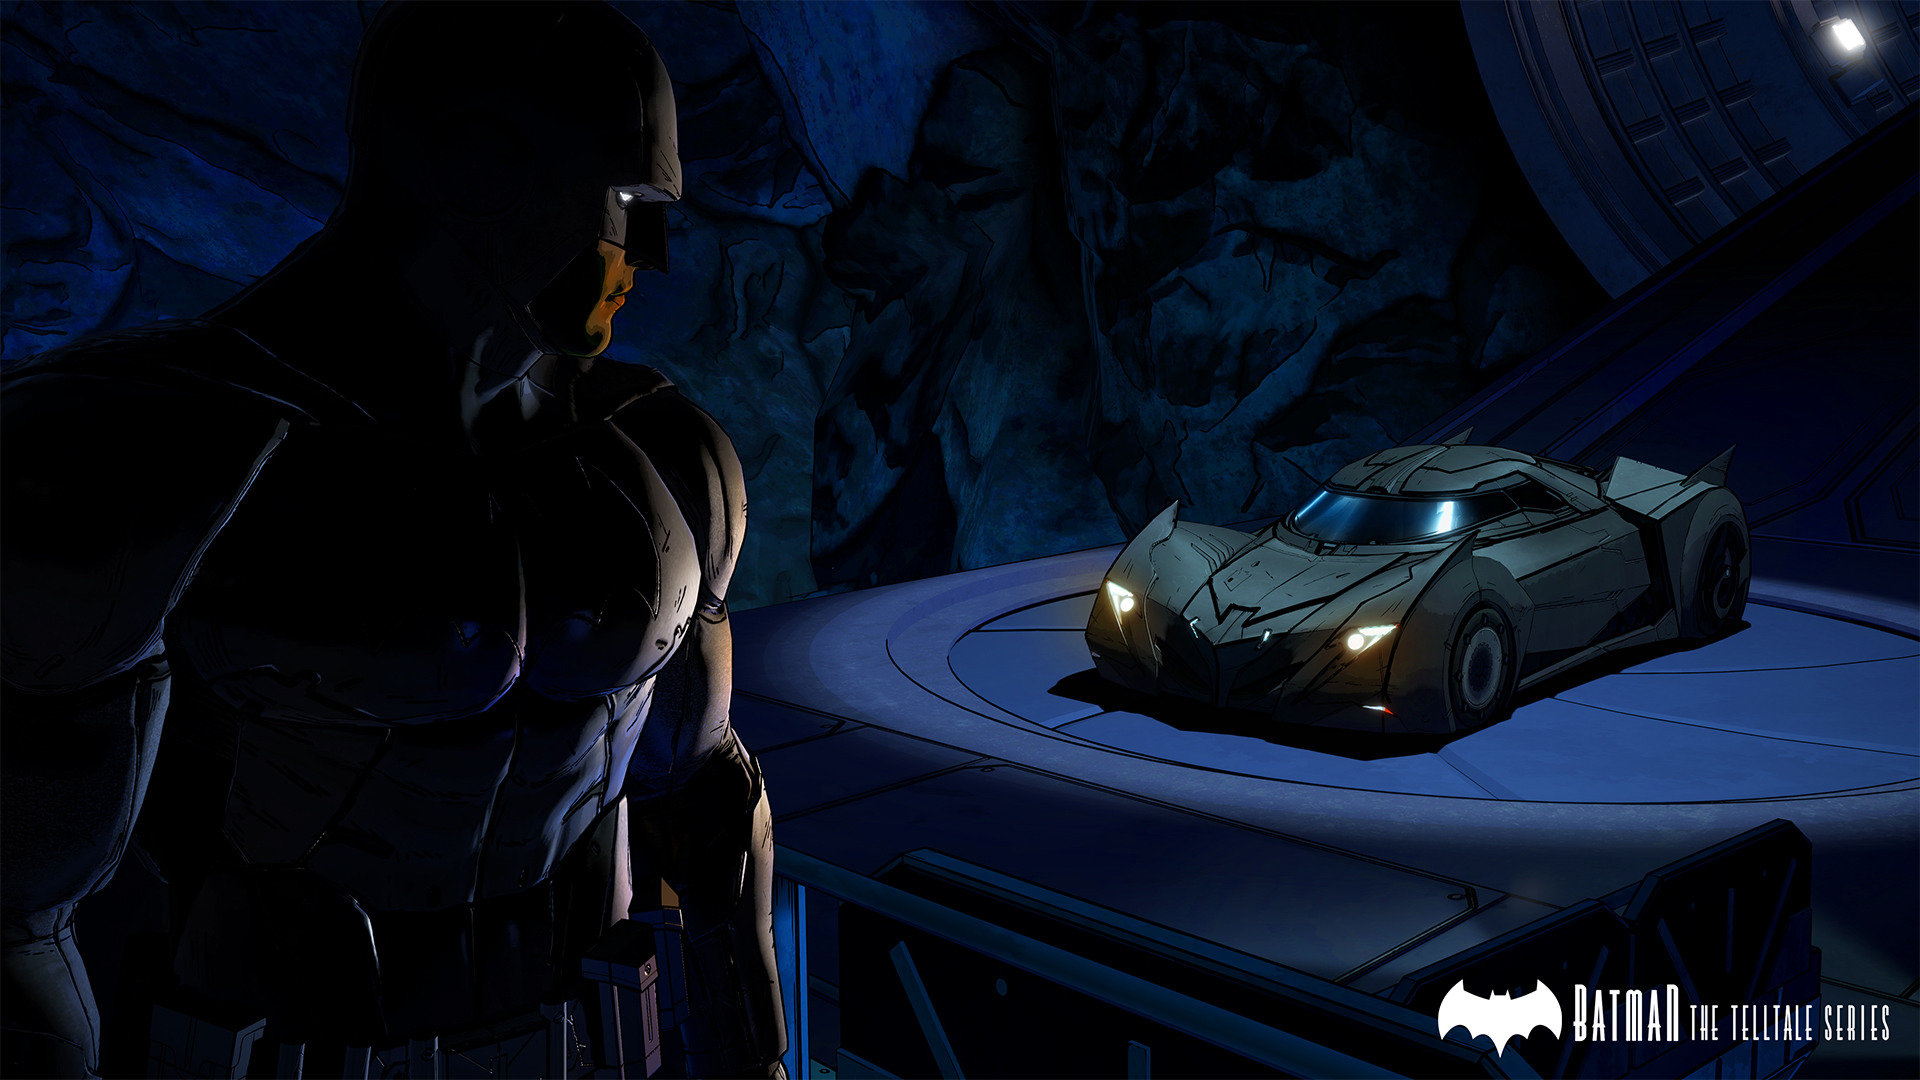 Best Batman: A Telltale Game Series background ID:450125 for High Resolution hd 1080p desktop